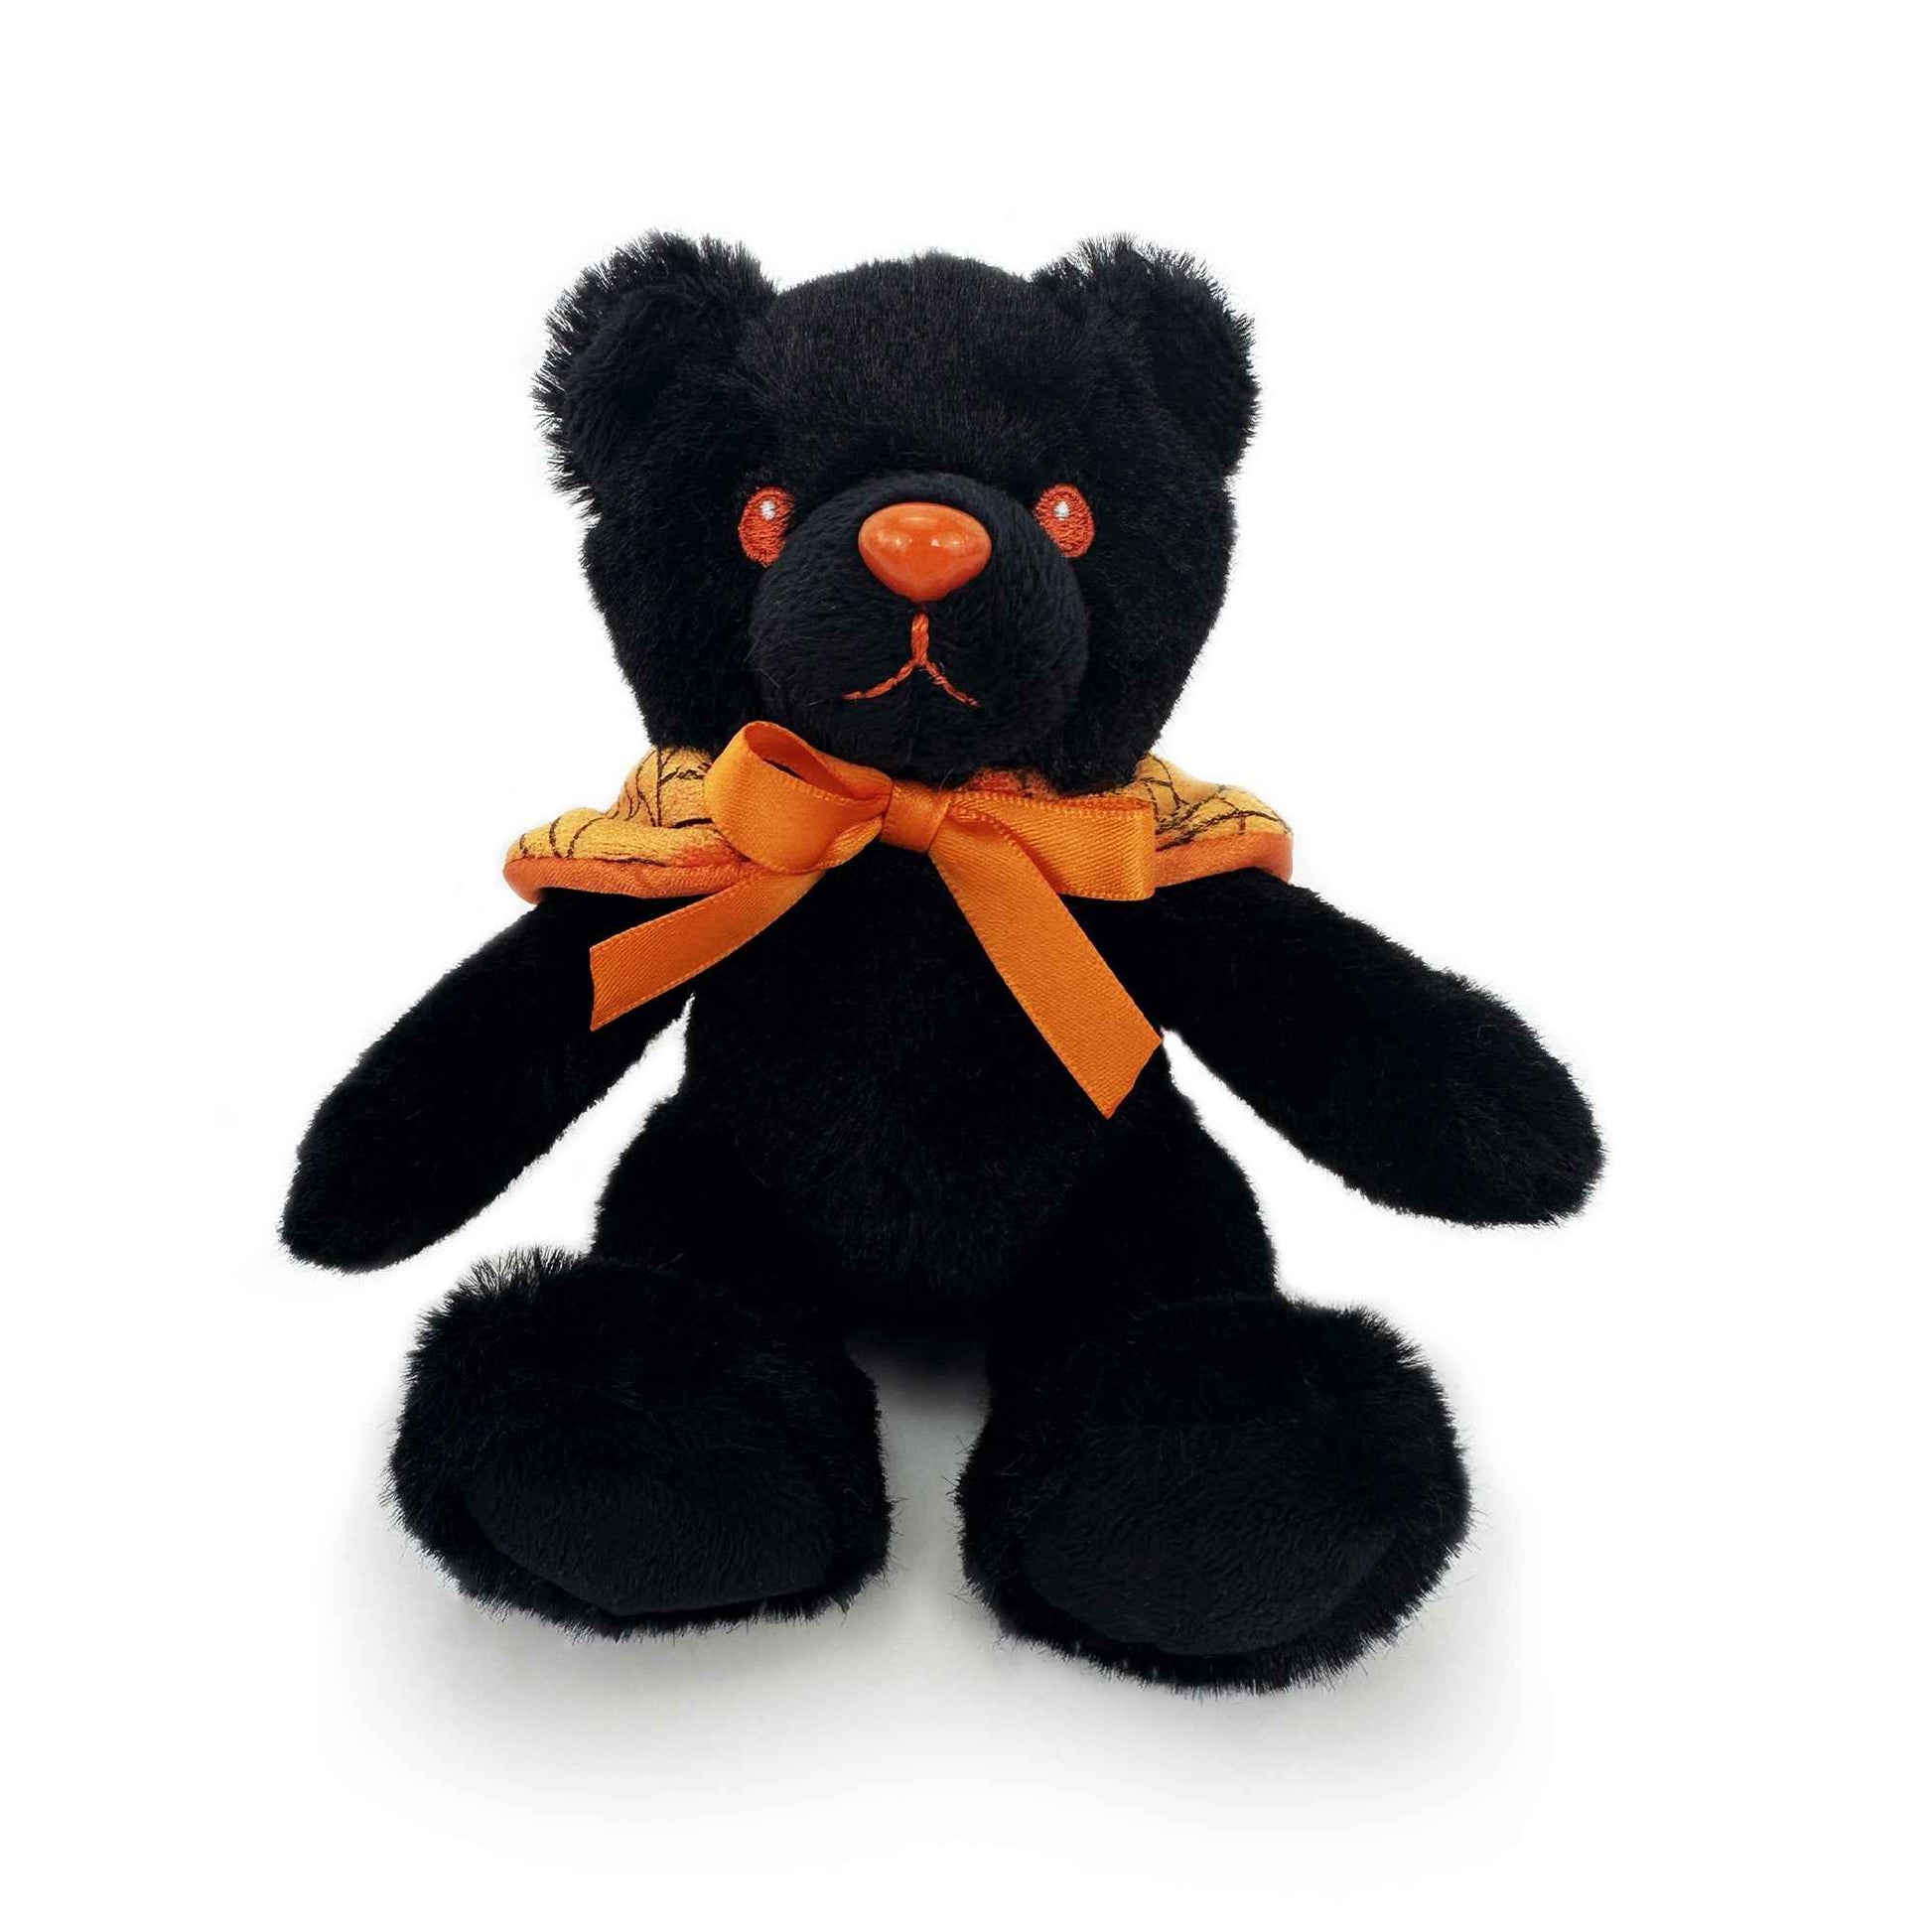 MIni Keychain teddy bear